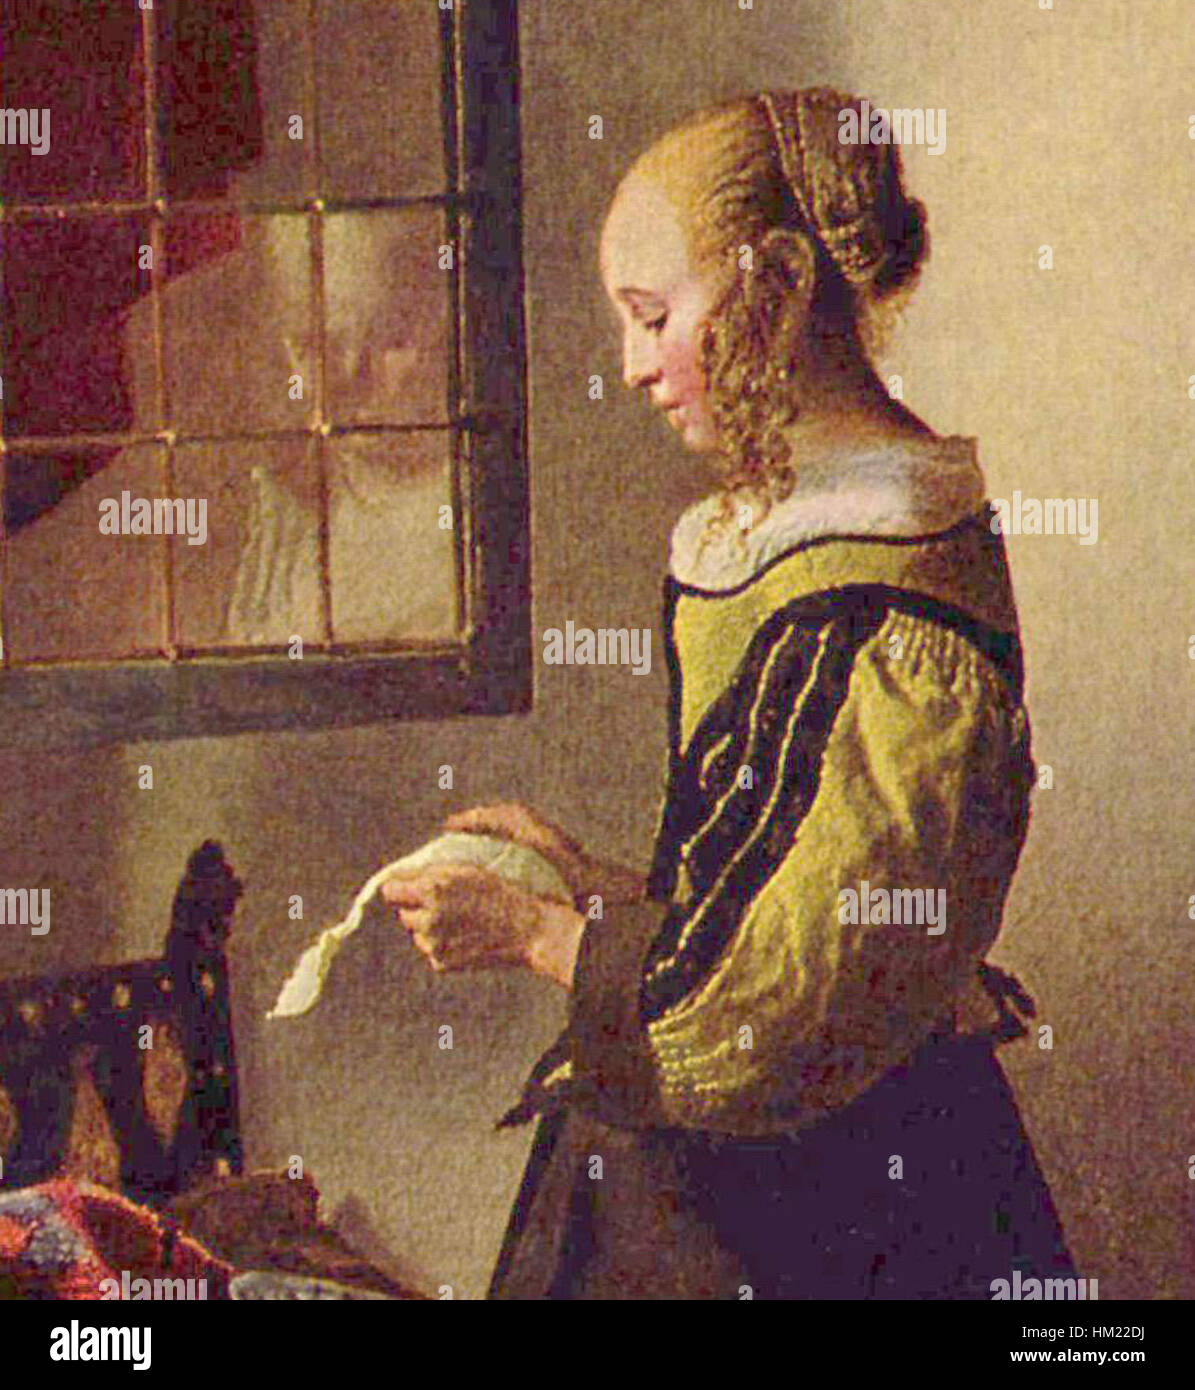 Vermeer van delft hi-res stock photography and images - Alamy